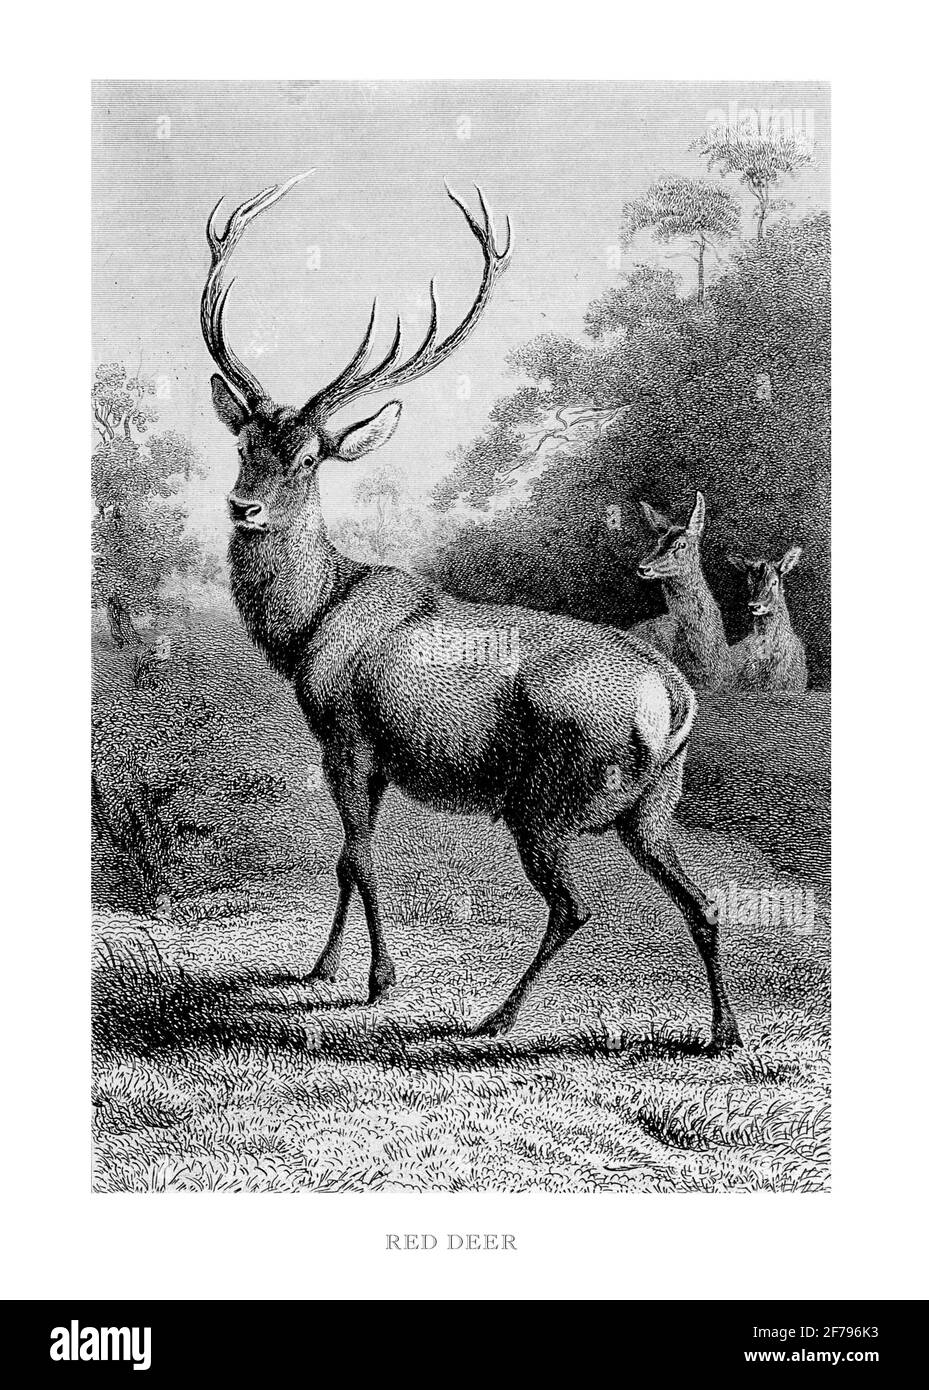 Red Deer Engraved Illustration Stock Photo